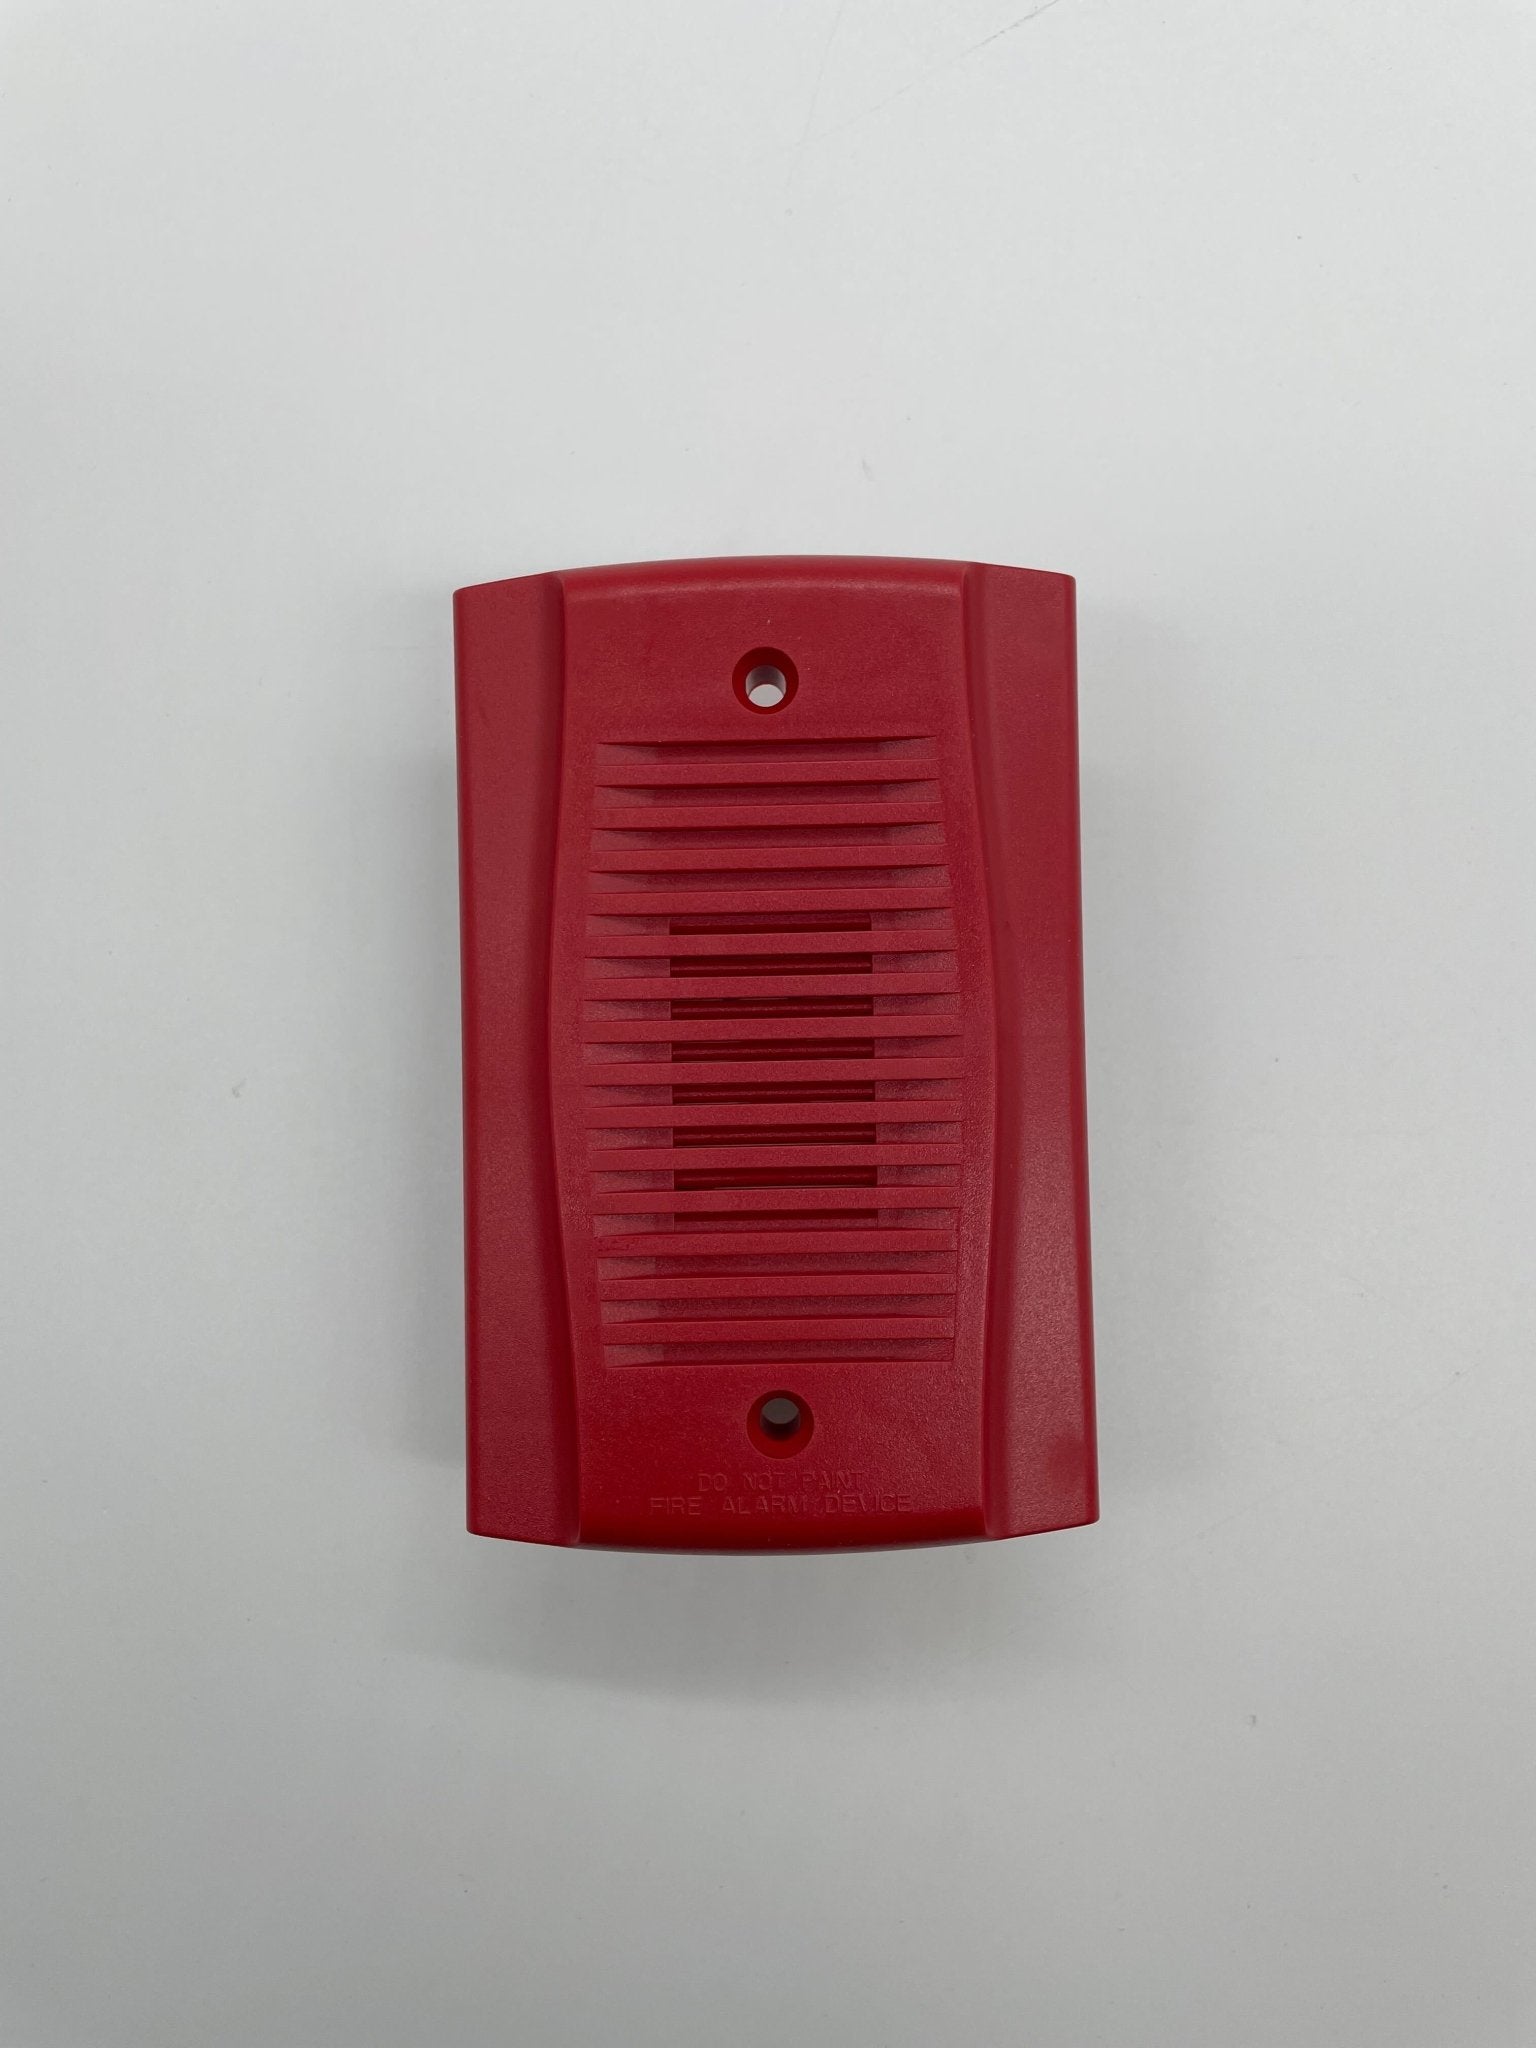 System Sensor MHR - The Fire Alarm Supplier